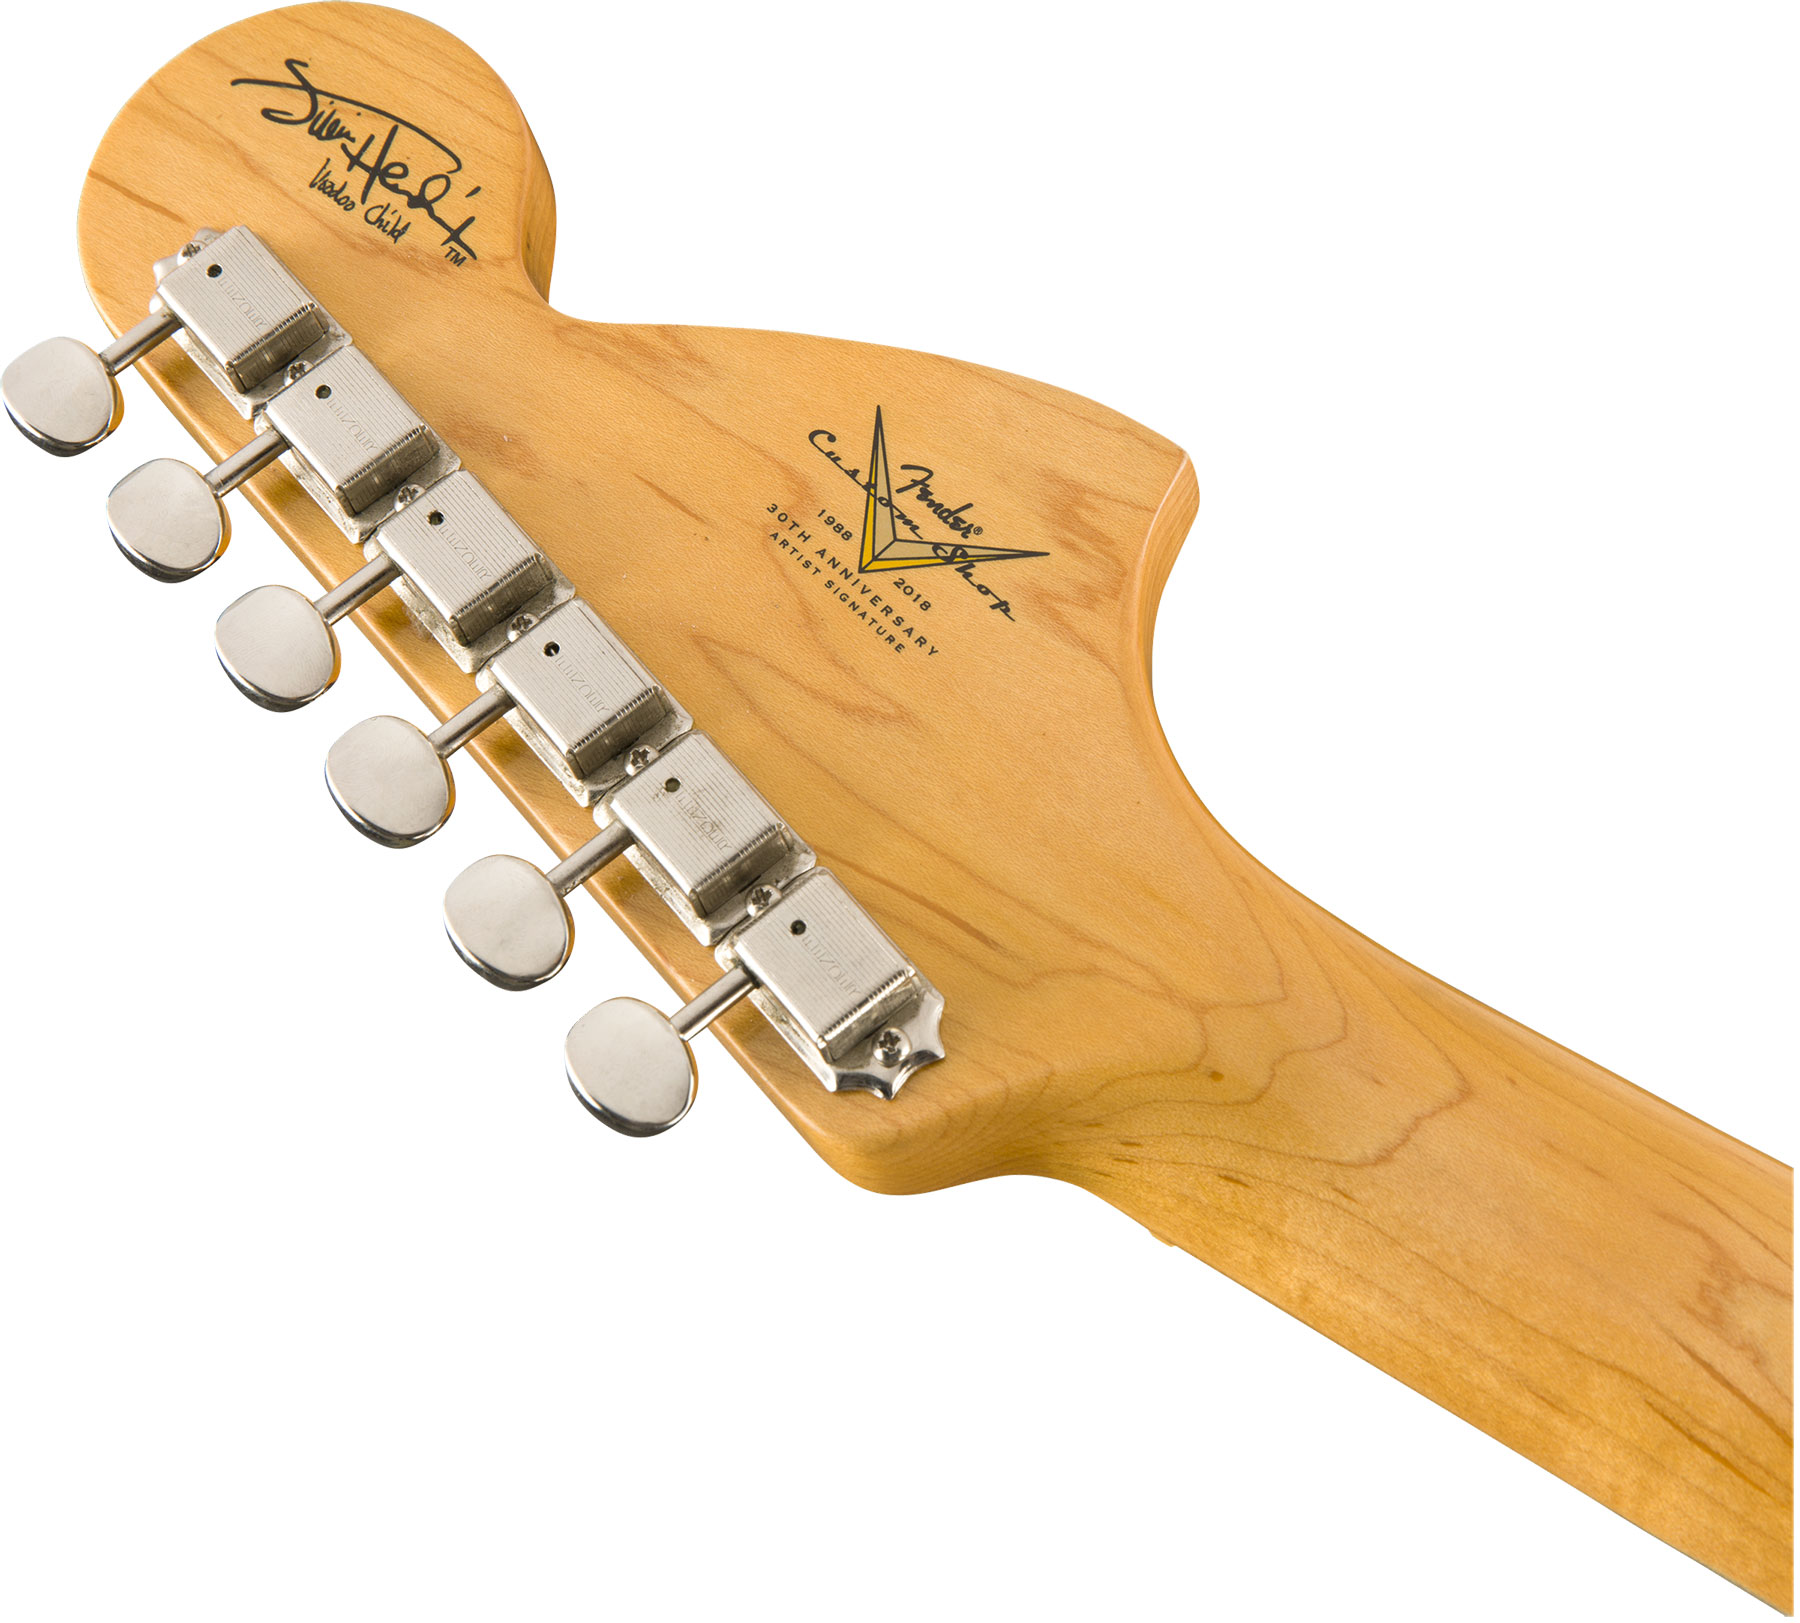 Fender Custom Shop Jimi Hendrix Strat Voodoo Child Signature 2018 Mn - Journeyman Relic Olympic White - Guitare Électrique Forme Str - Variation 4